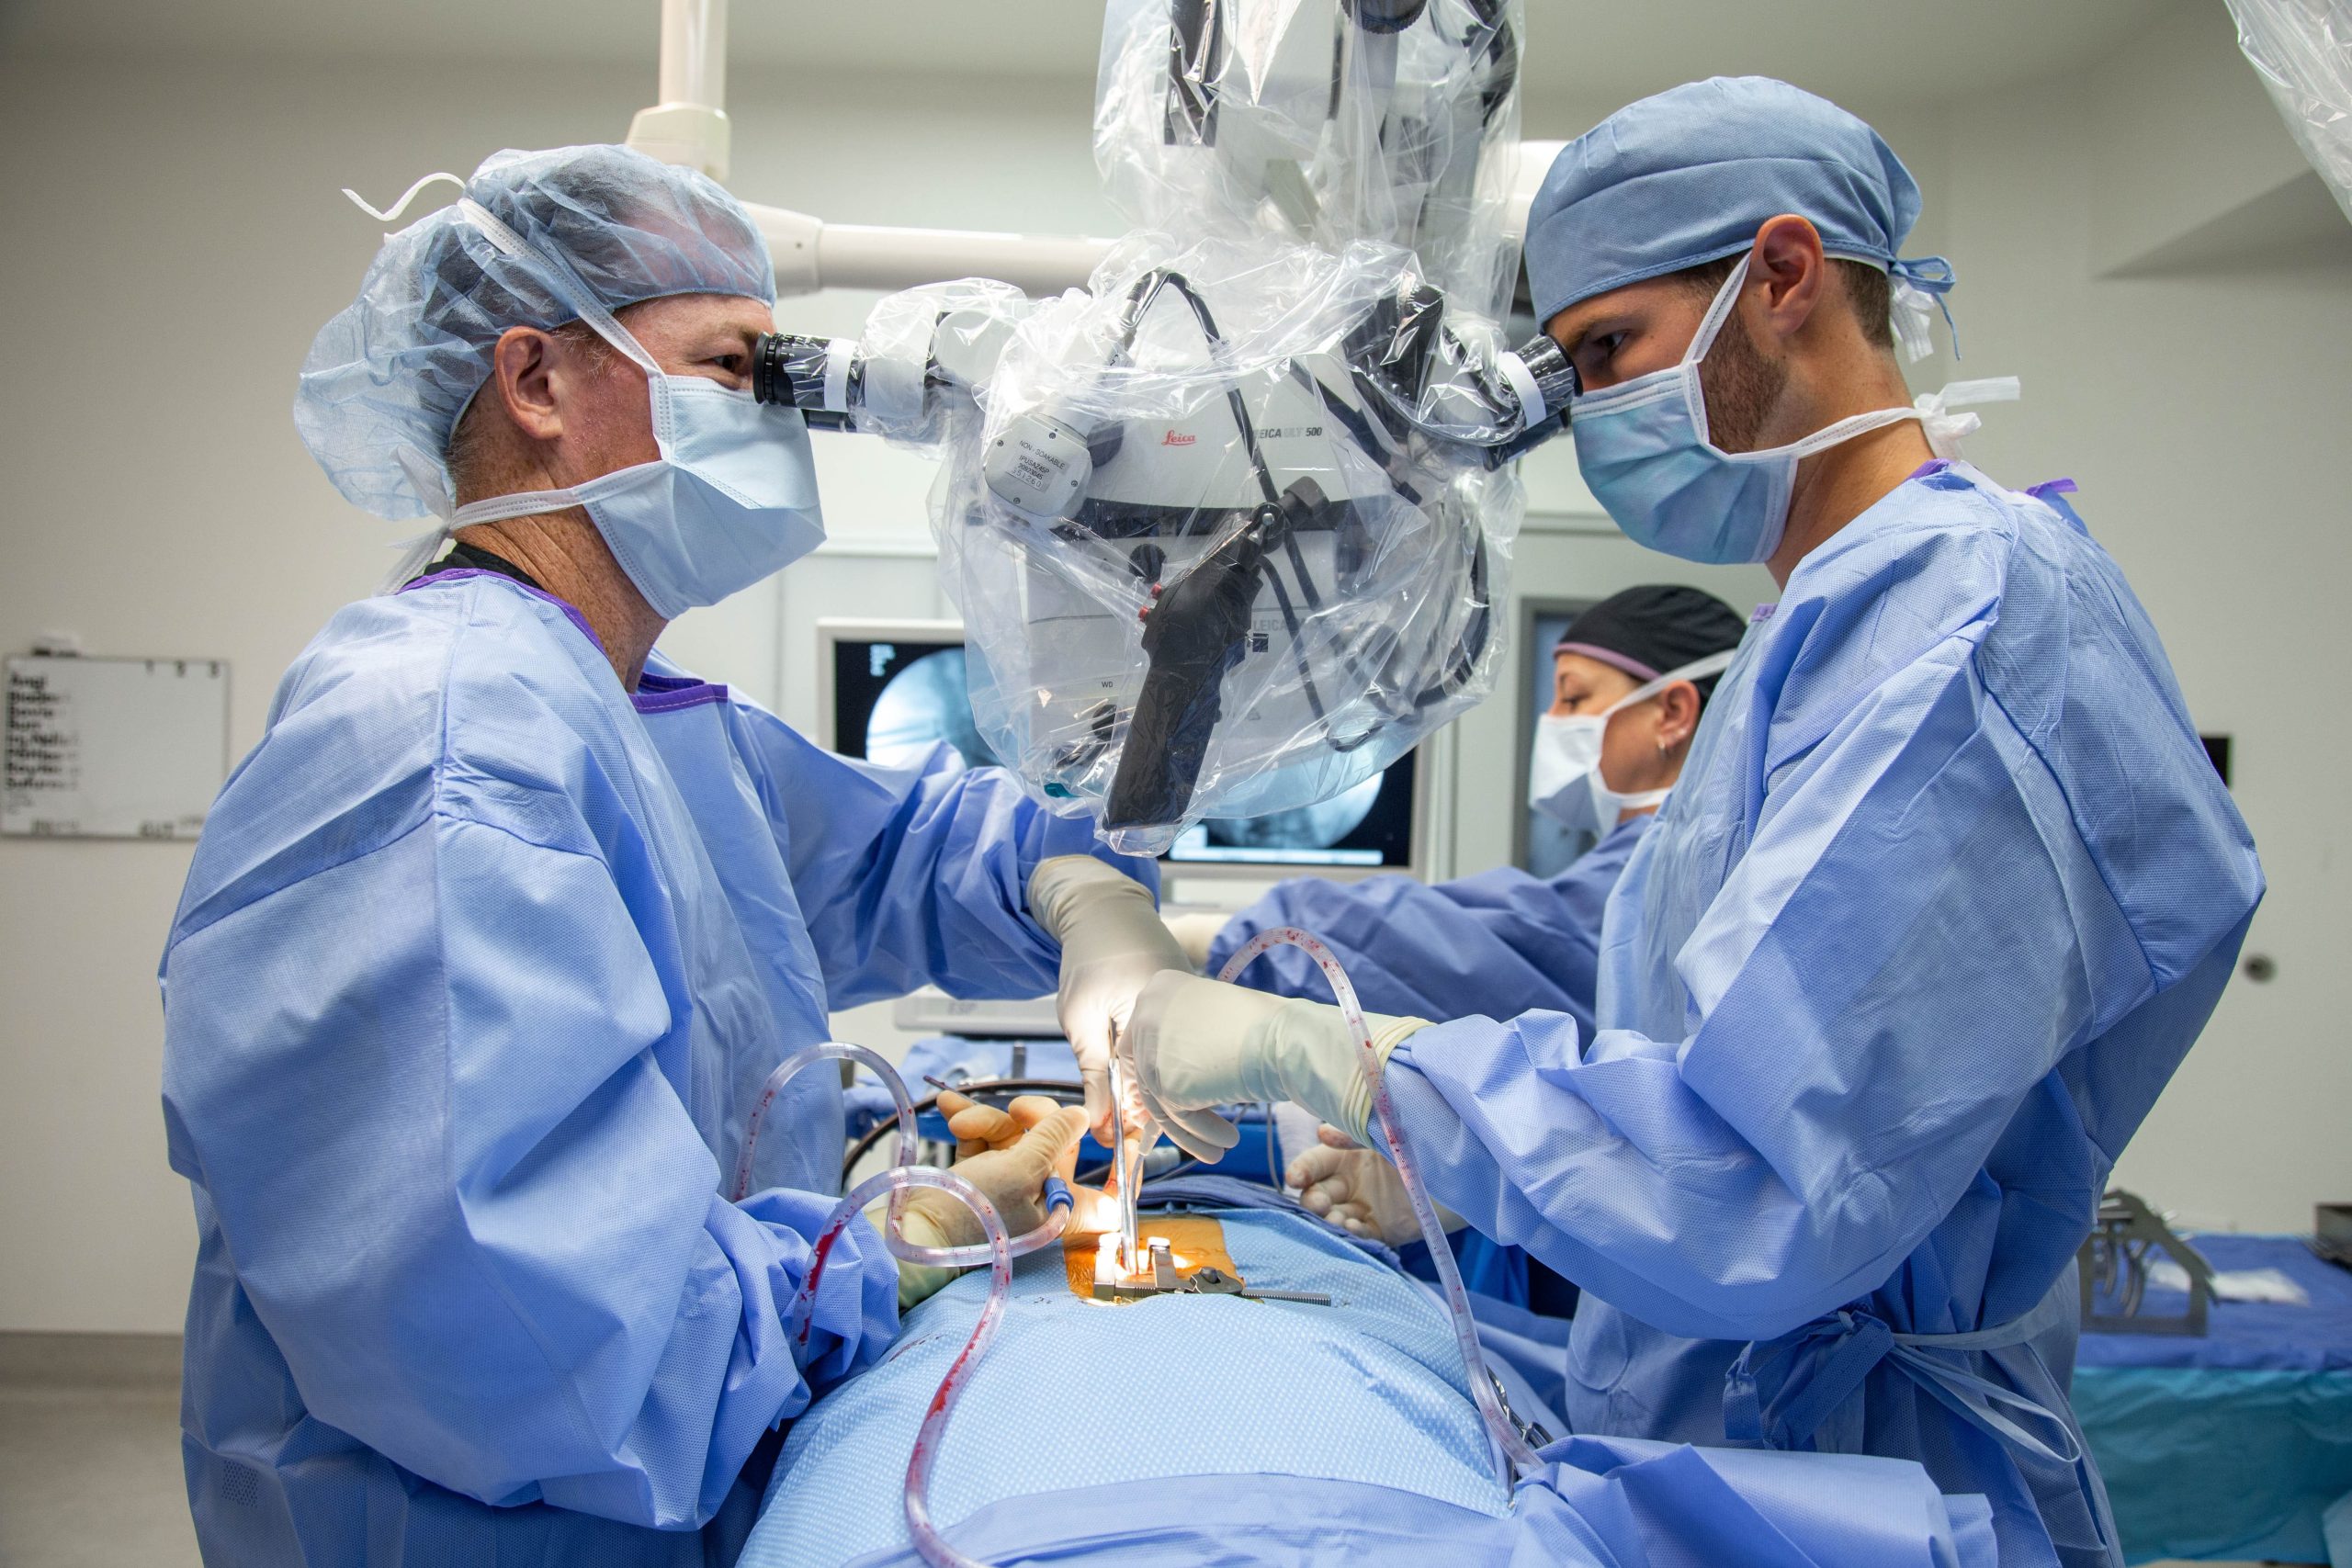 Dr. Fields minimally invasive spine surgery